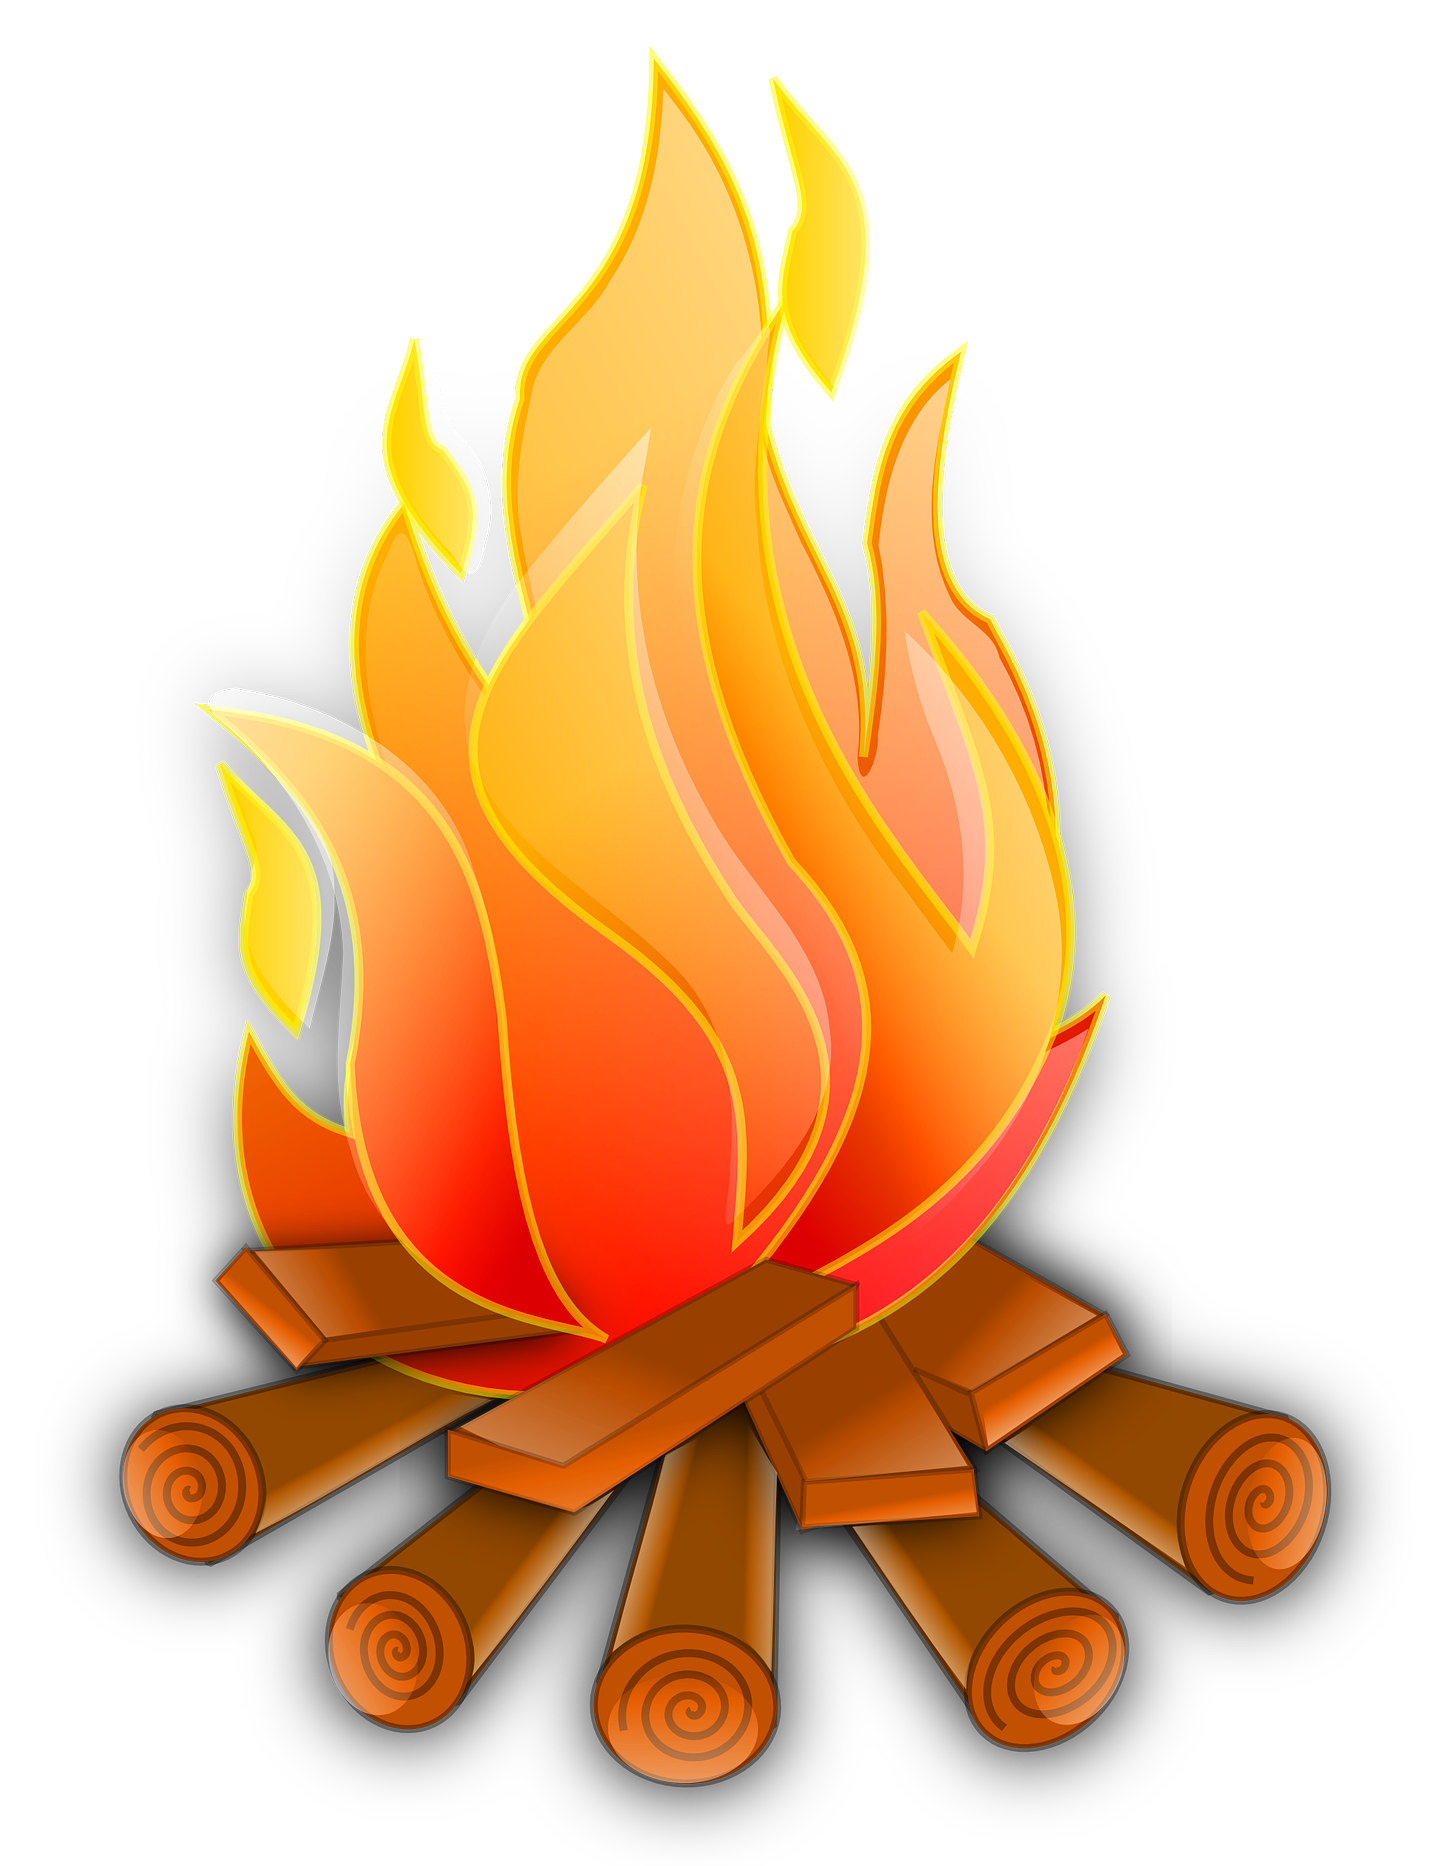 A Cartoon Of A Campfire